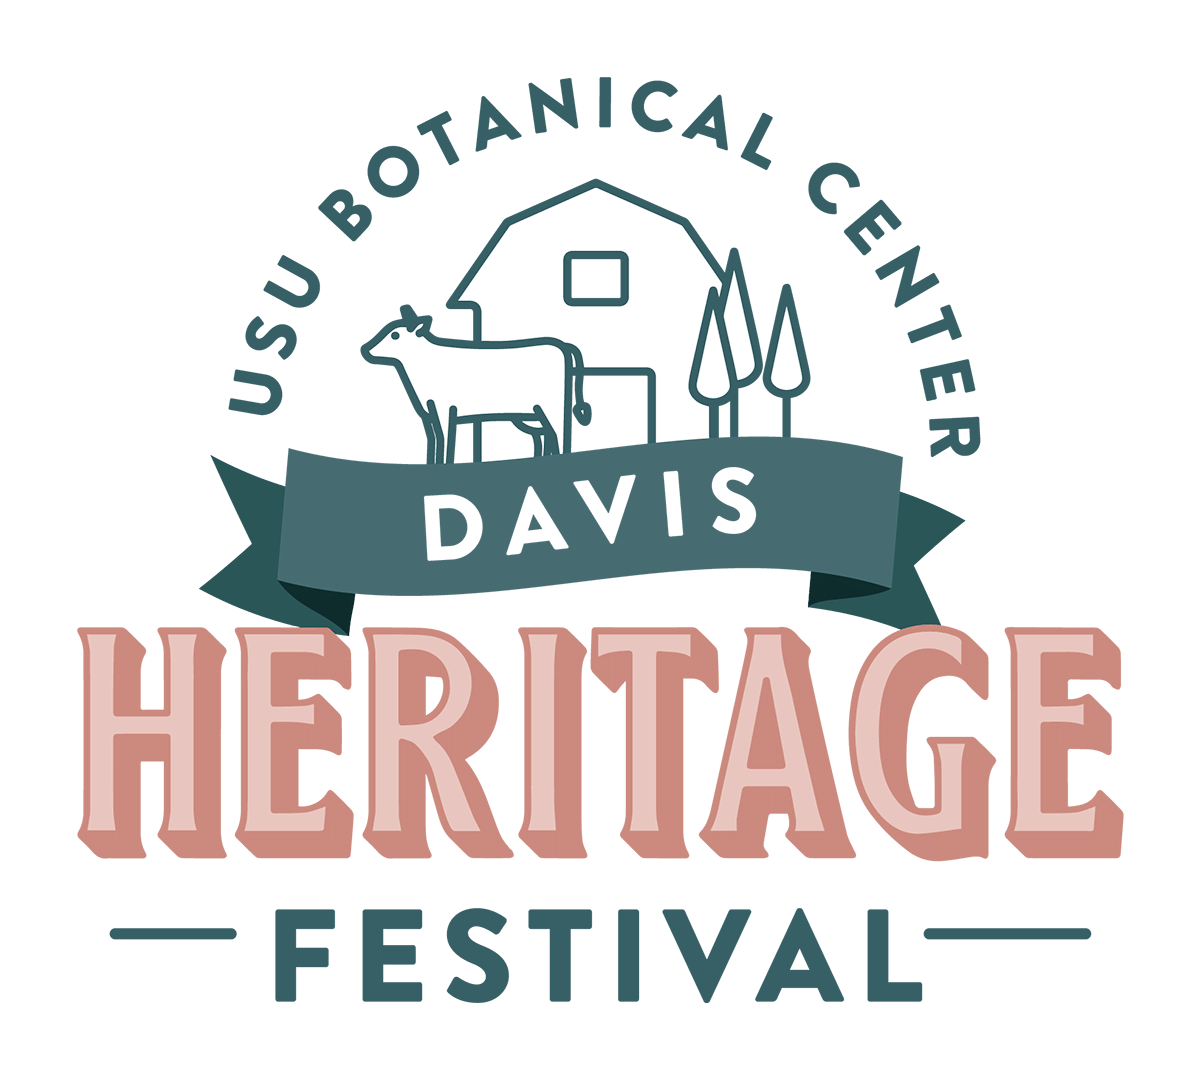 Davis Heritage Festival